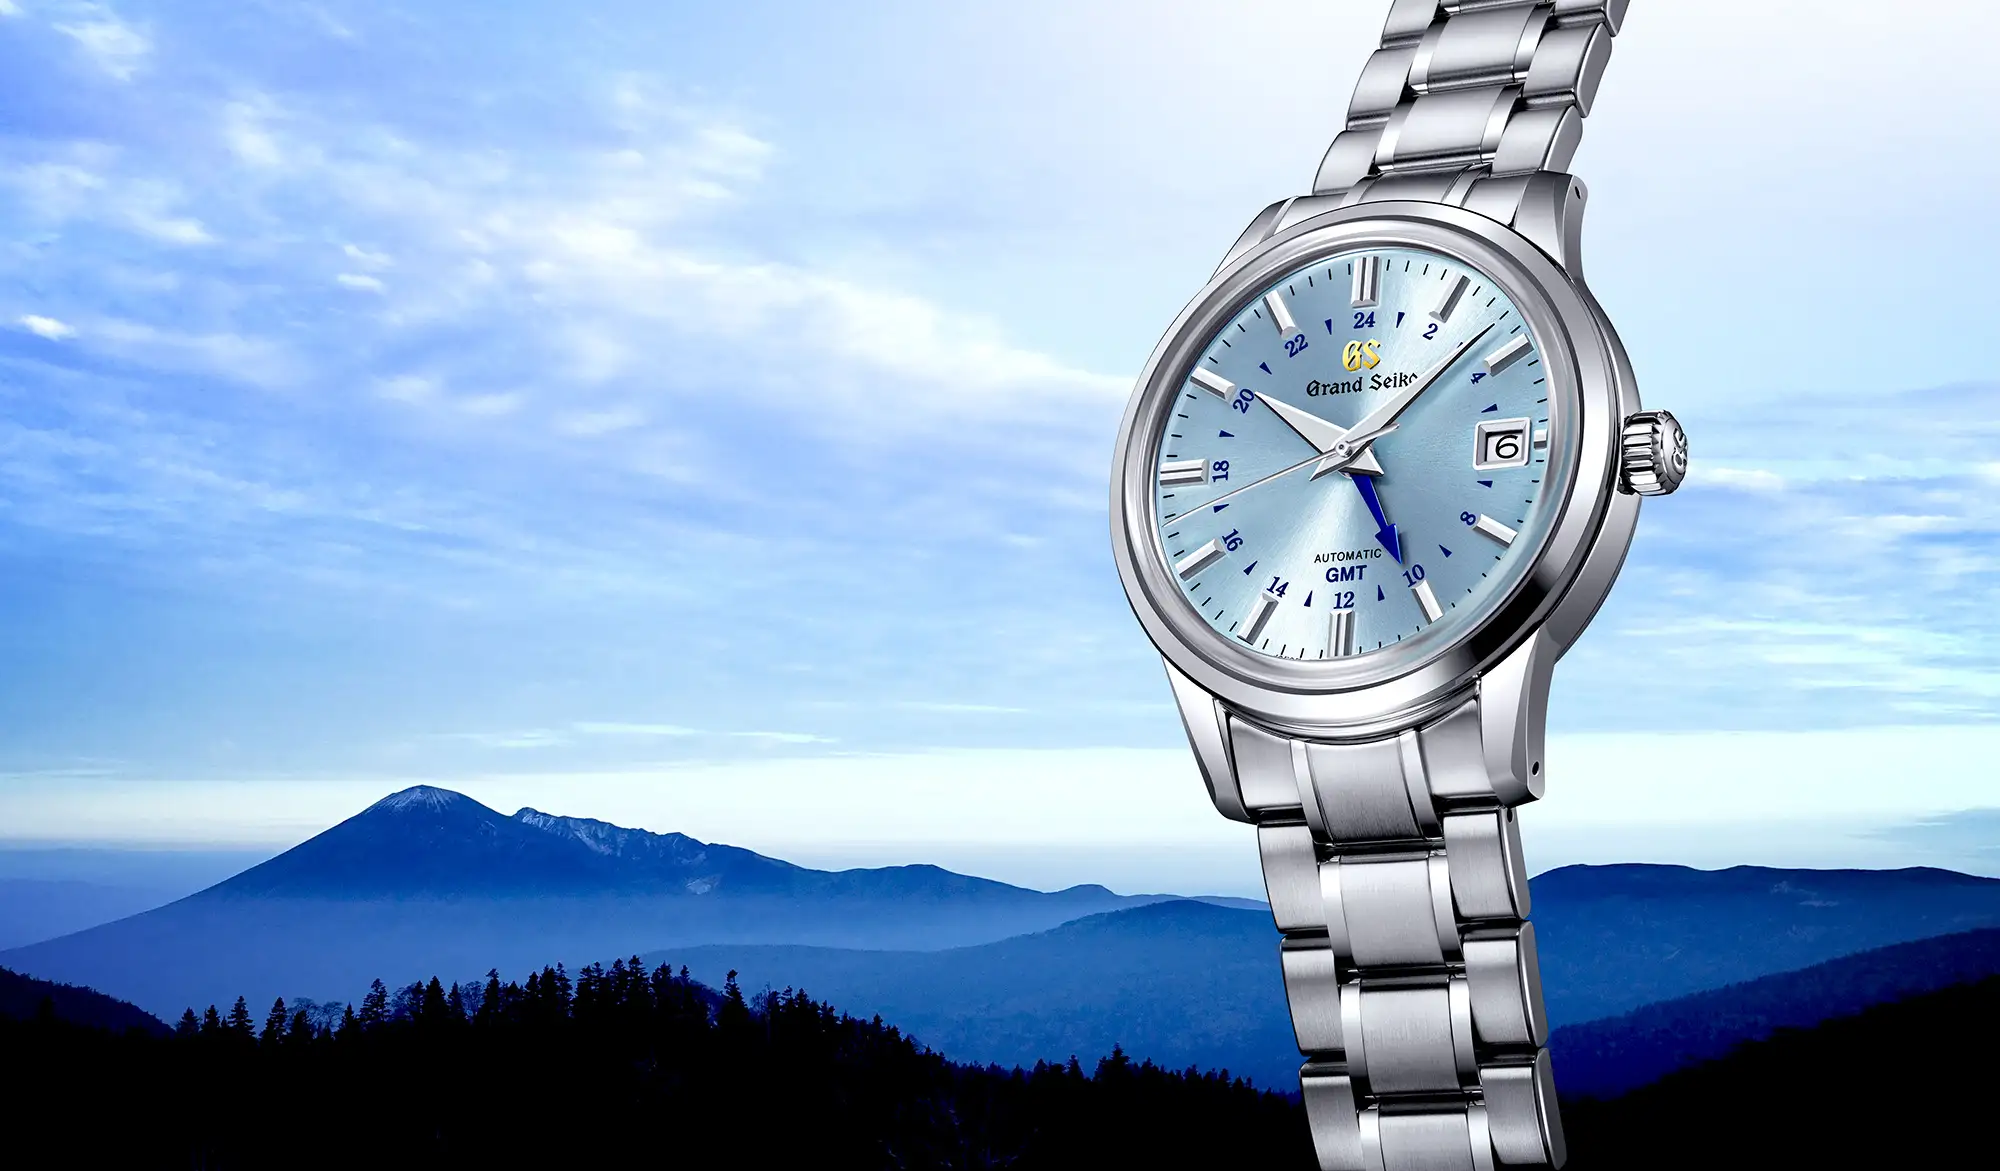 Grand Seiko SBGM253 mechanical watch against mountain-scape.